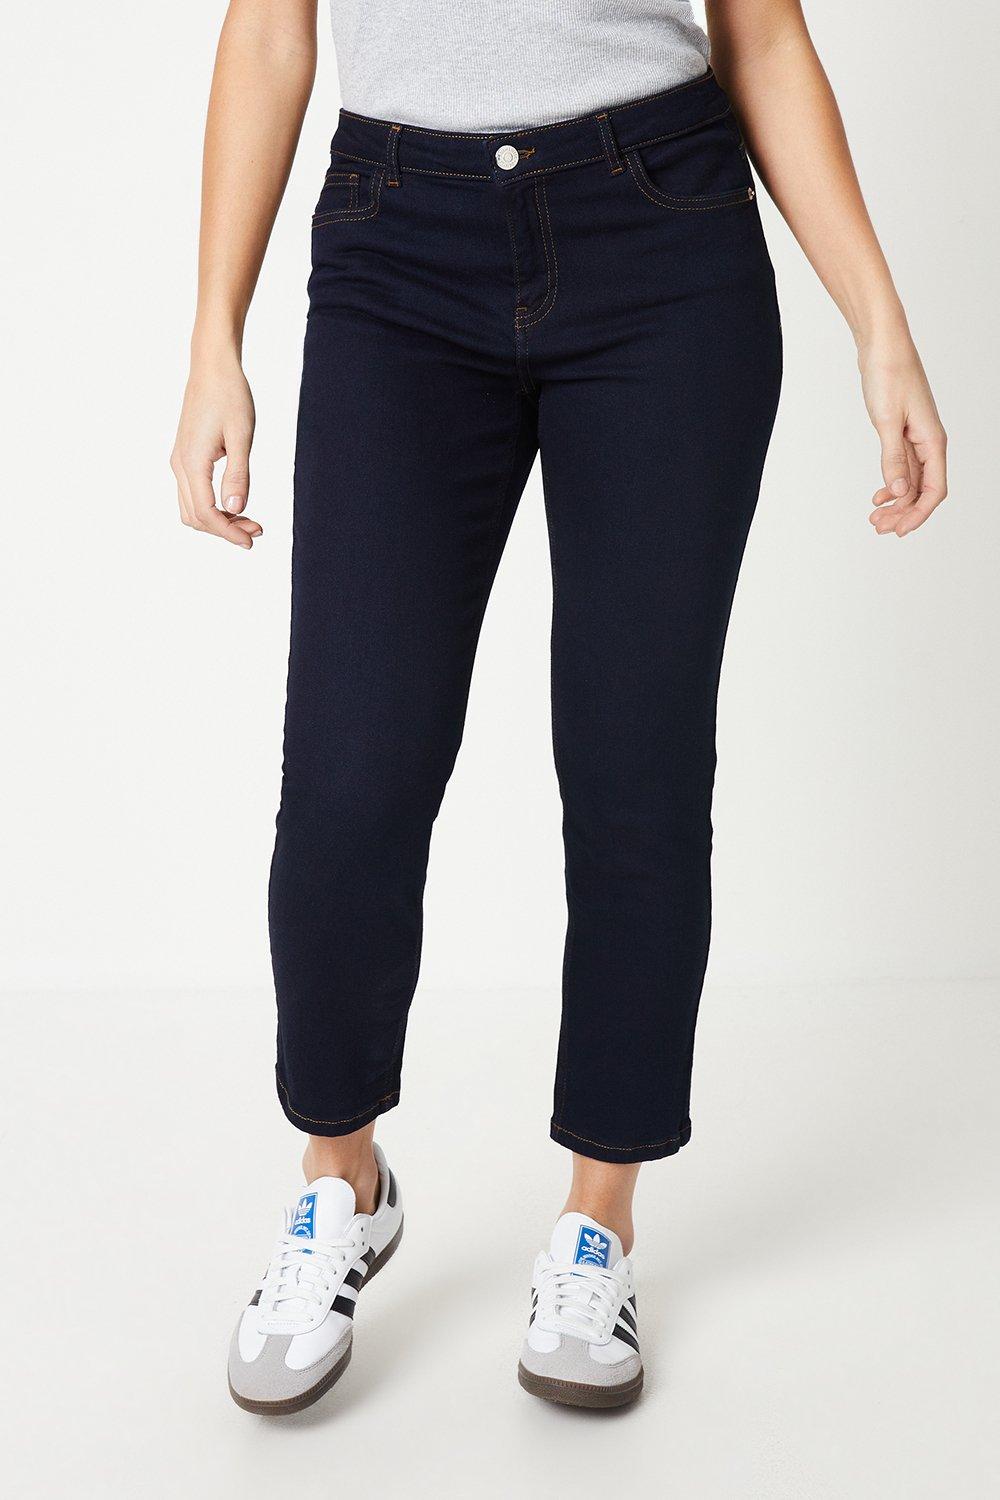 Women’s Petite Comfort Stretch Slim Jeans - indigo - 10